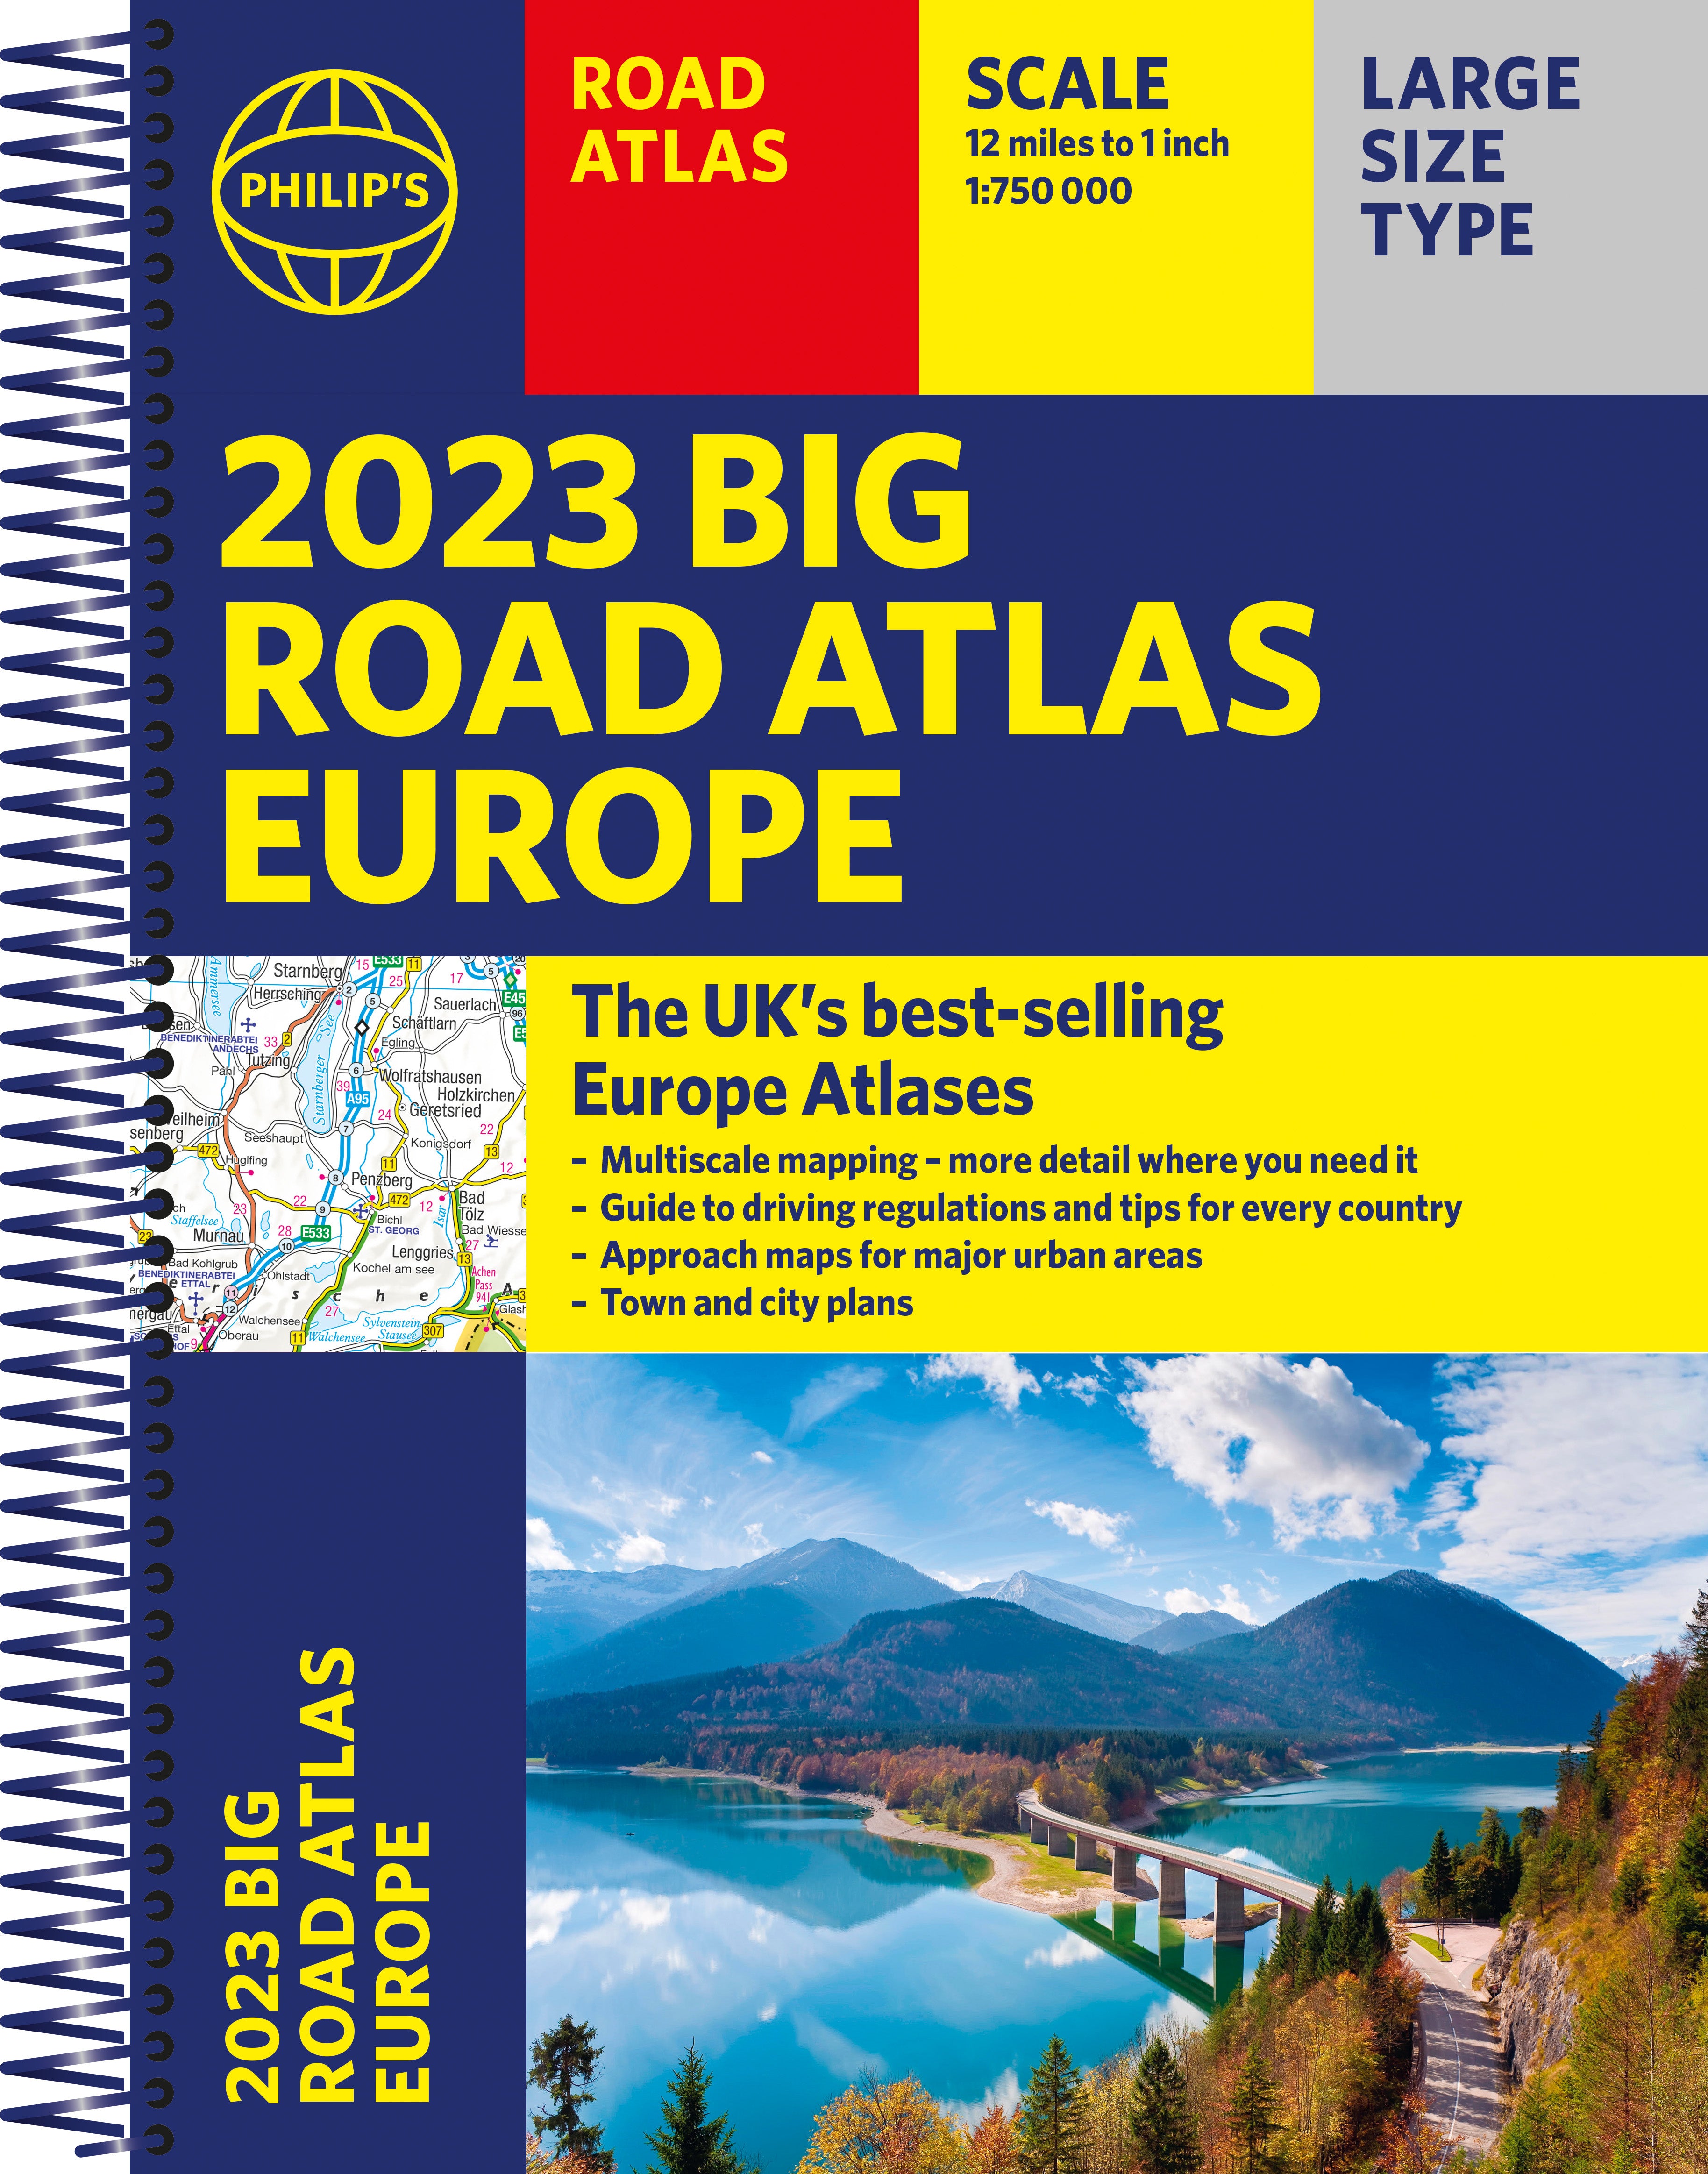 Big Road Atlas Europe by Philip's (2023)